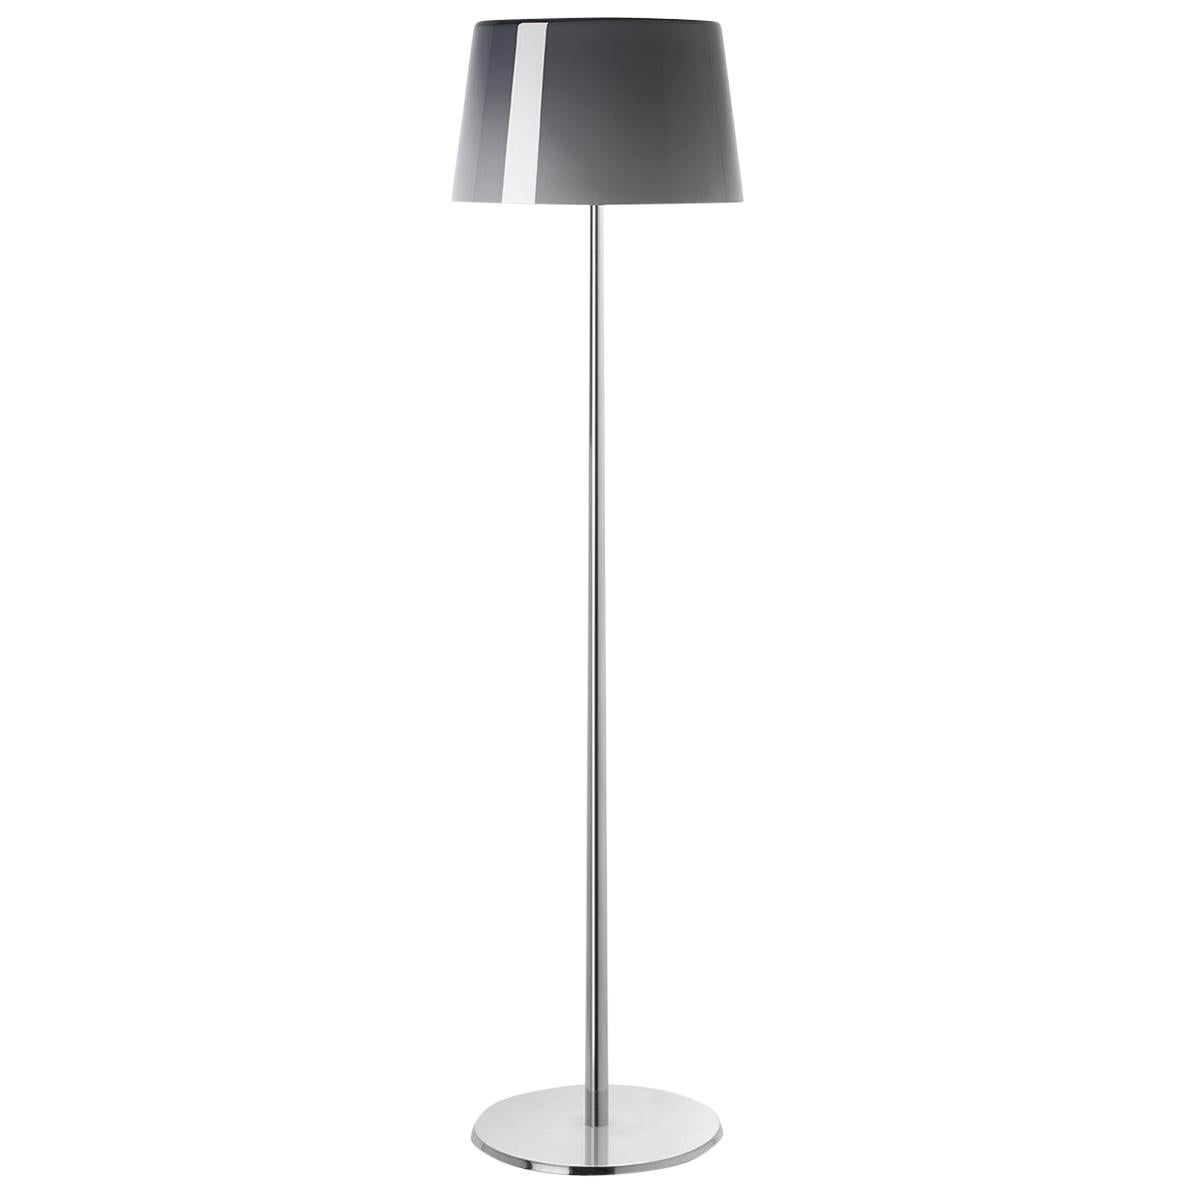 Foscarini Lumiere Extra Large Floor Lamp in Grey & Aluminum by Rodolfo Dordoni